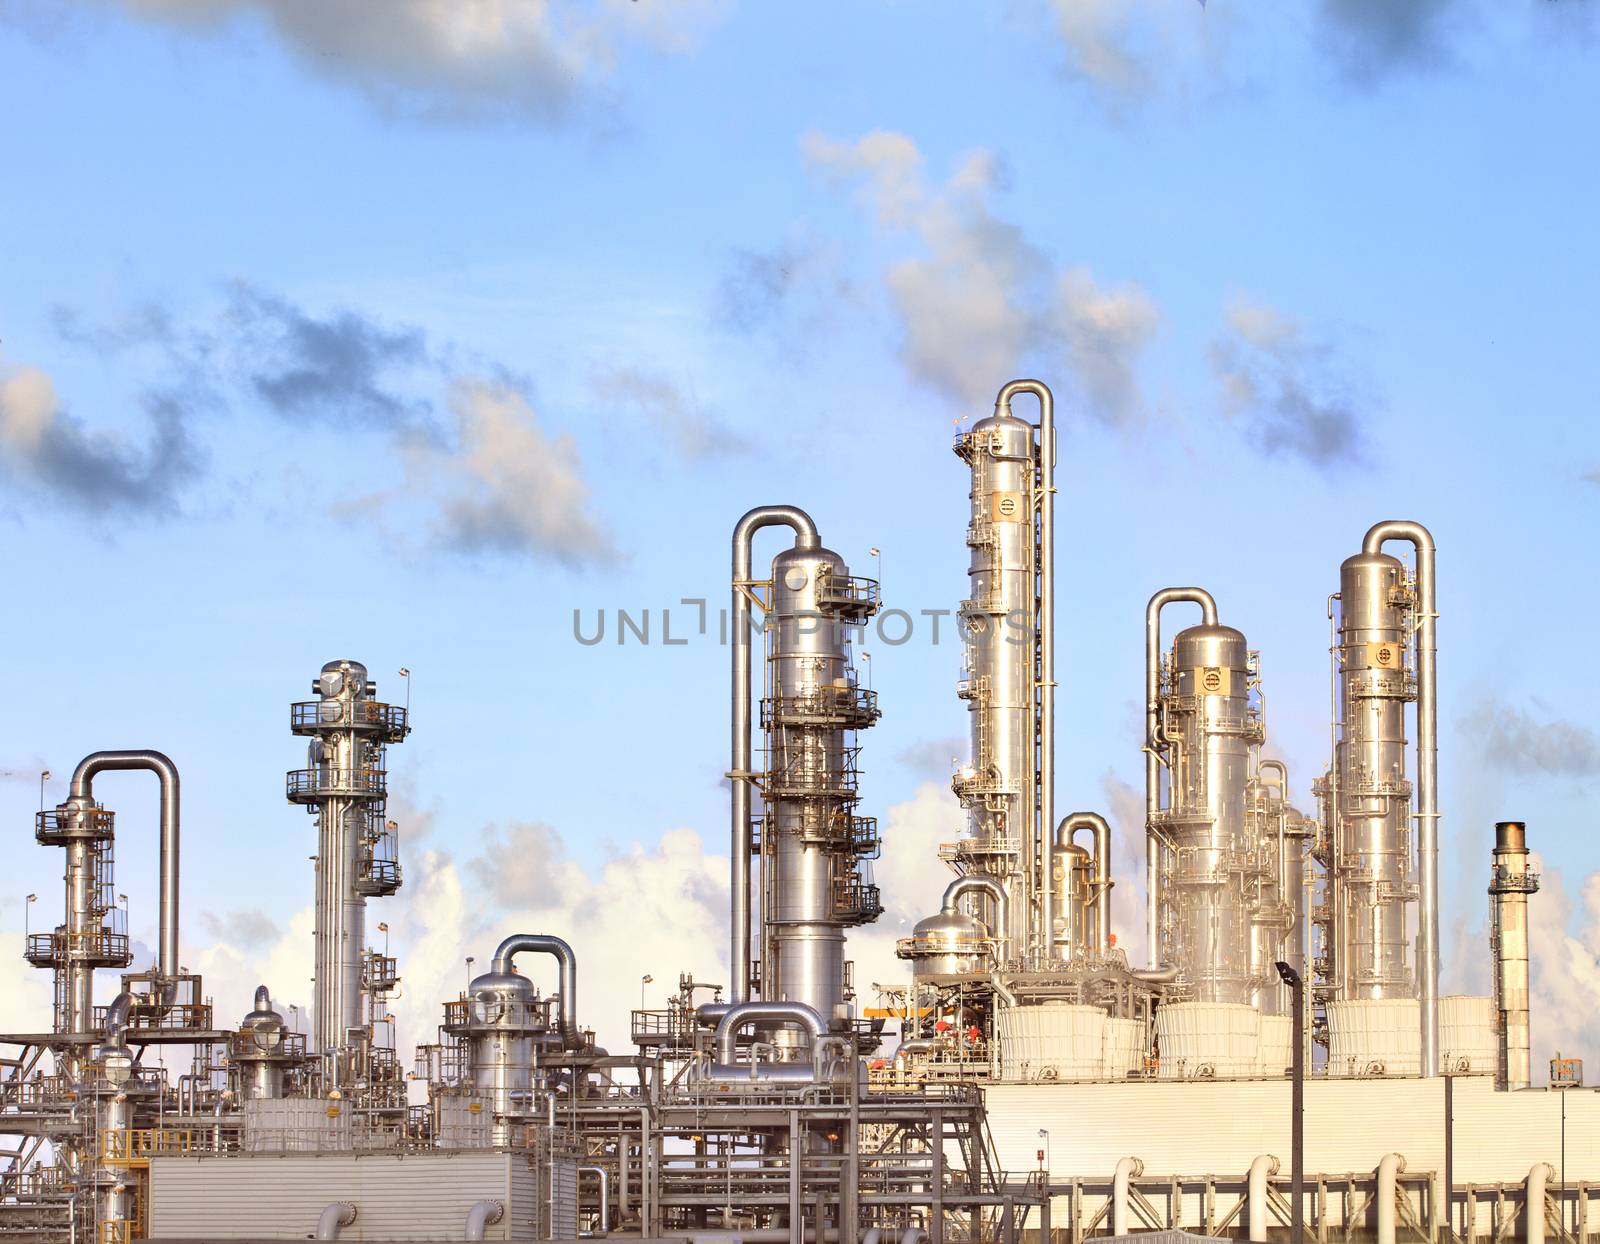  refinery petrochemical plant in heavy industry estate